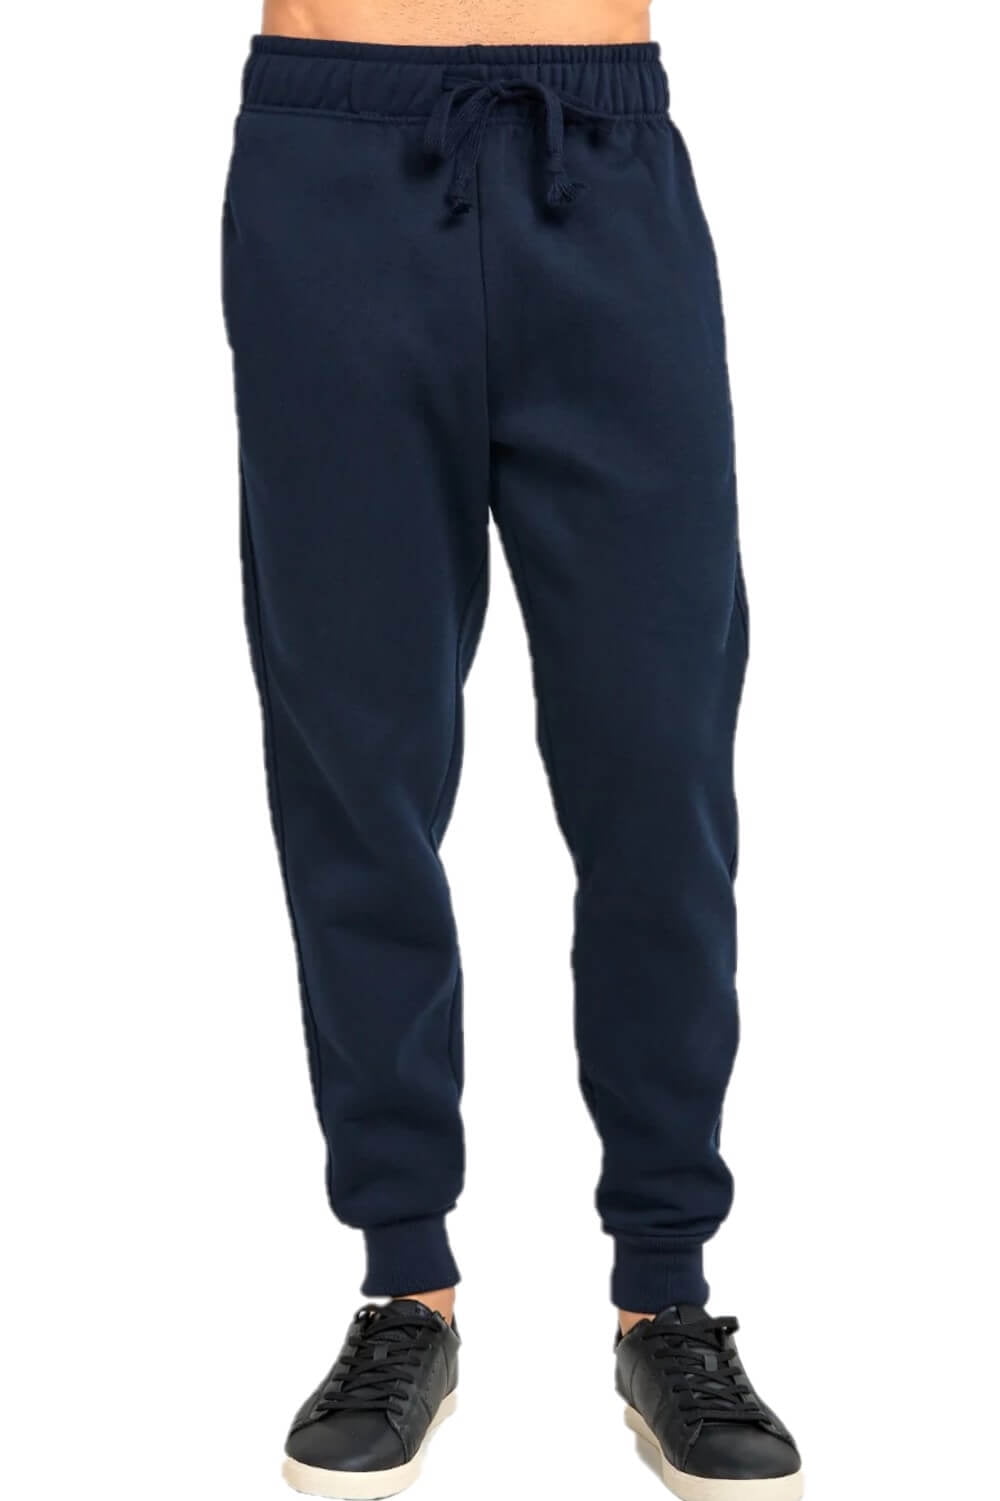 Men's Heavy Sweatpants Fleece Lined Joggers with Pockets, Navy L, 1 ...